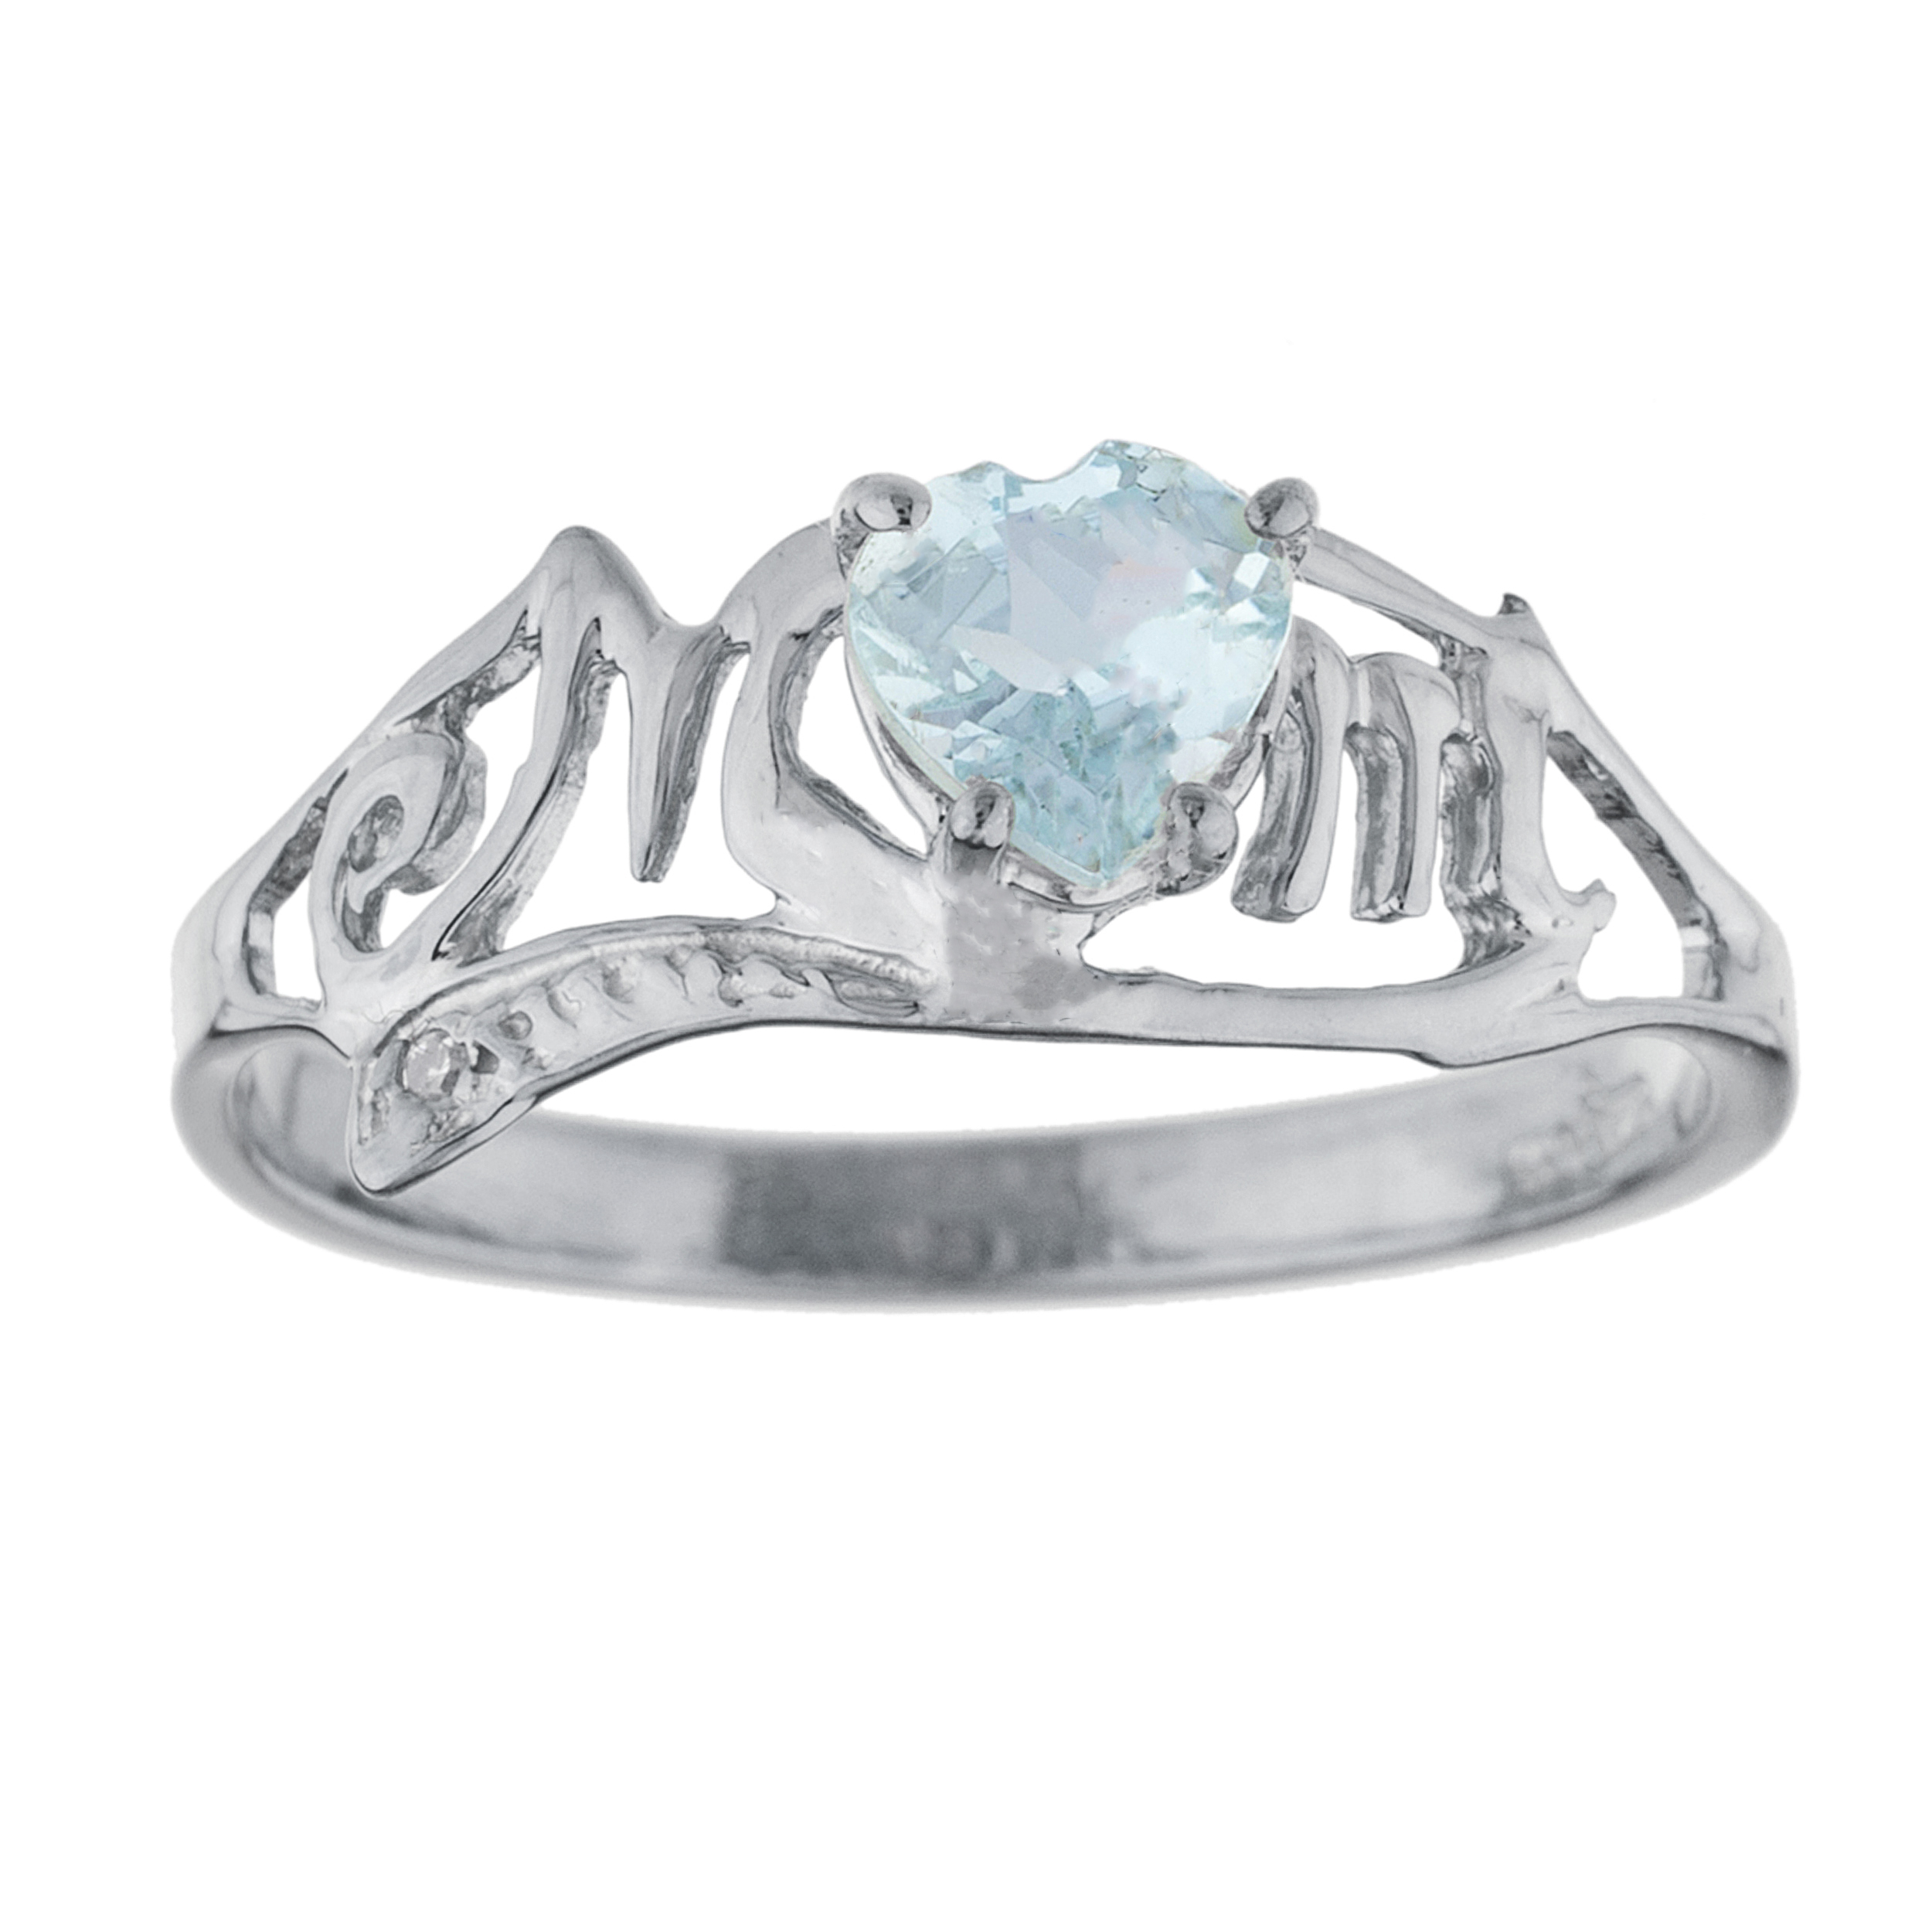 AmaranTeen 925 Sterling Silver Filled Aquamarine Wedding & Engagement Ring